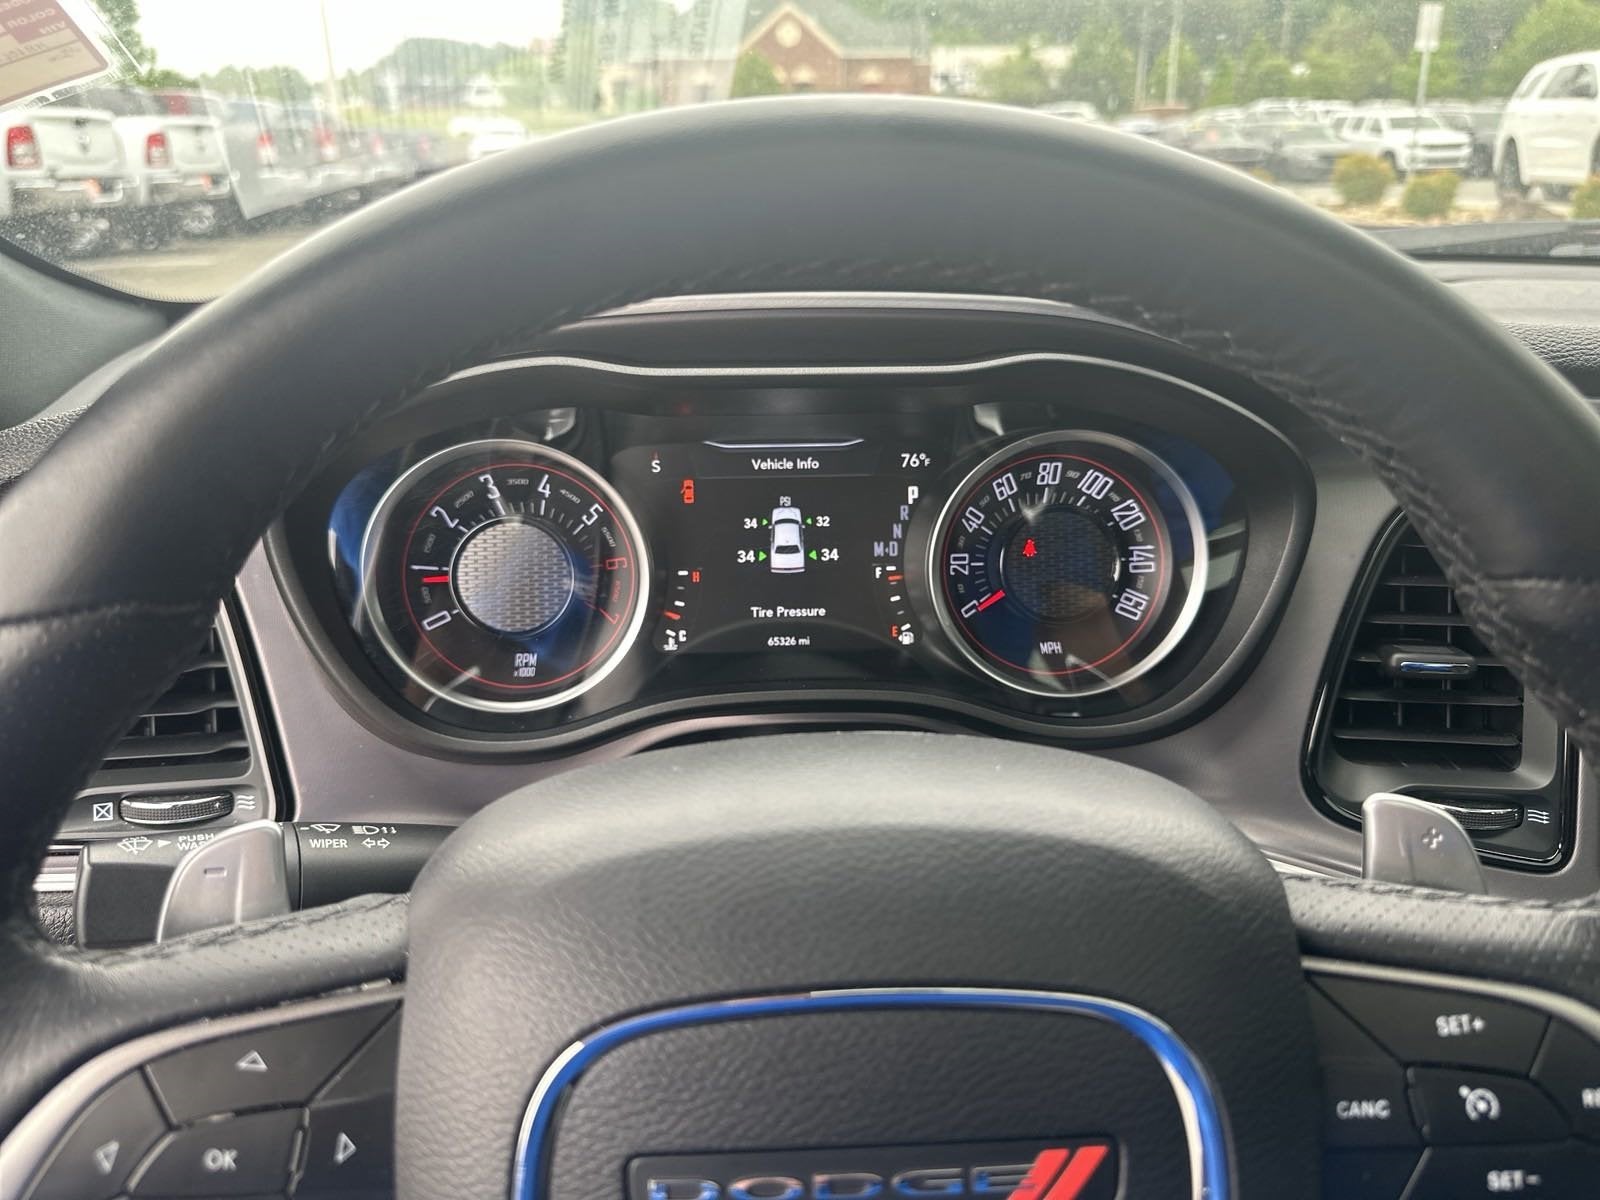 2019 Dodge Challenger R/T